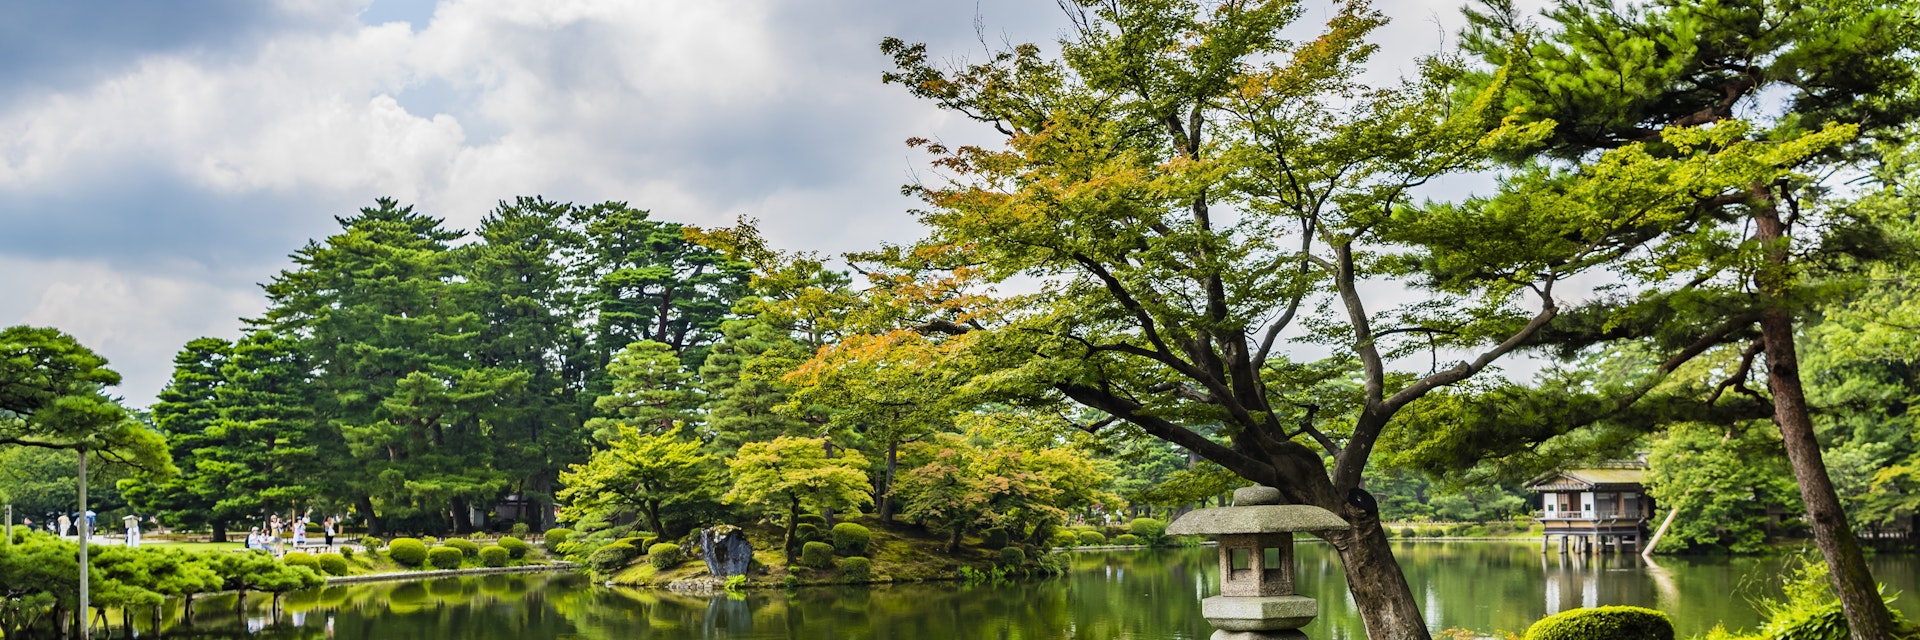 KANAZAWA, JAPAN - JUL 31 2016: Kenroku-en located in Kanazawa, Ishikawa, Japan, is an old private garden. Along with Kairaku-en and Koraku-en, Kenroku-en is one of the Three Great Gardens of Japan.